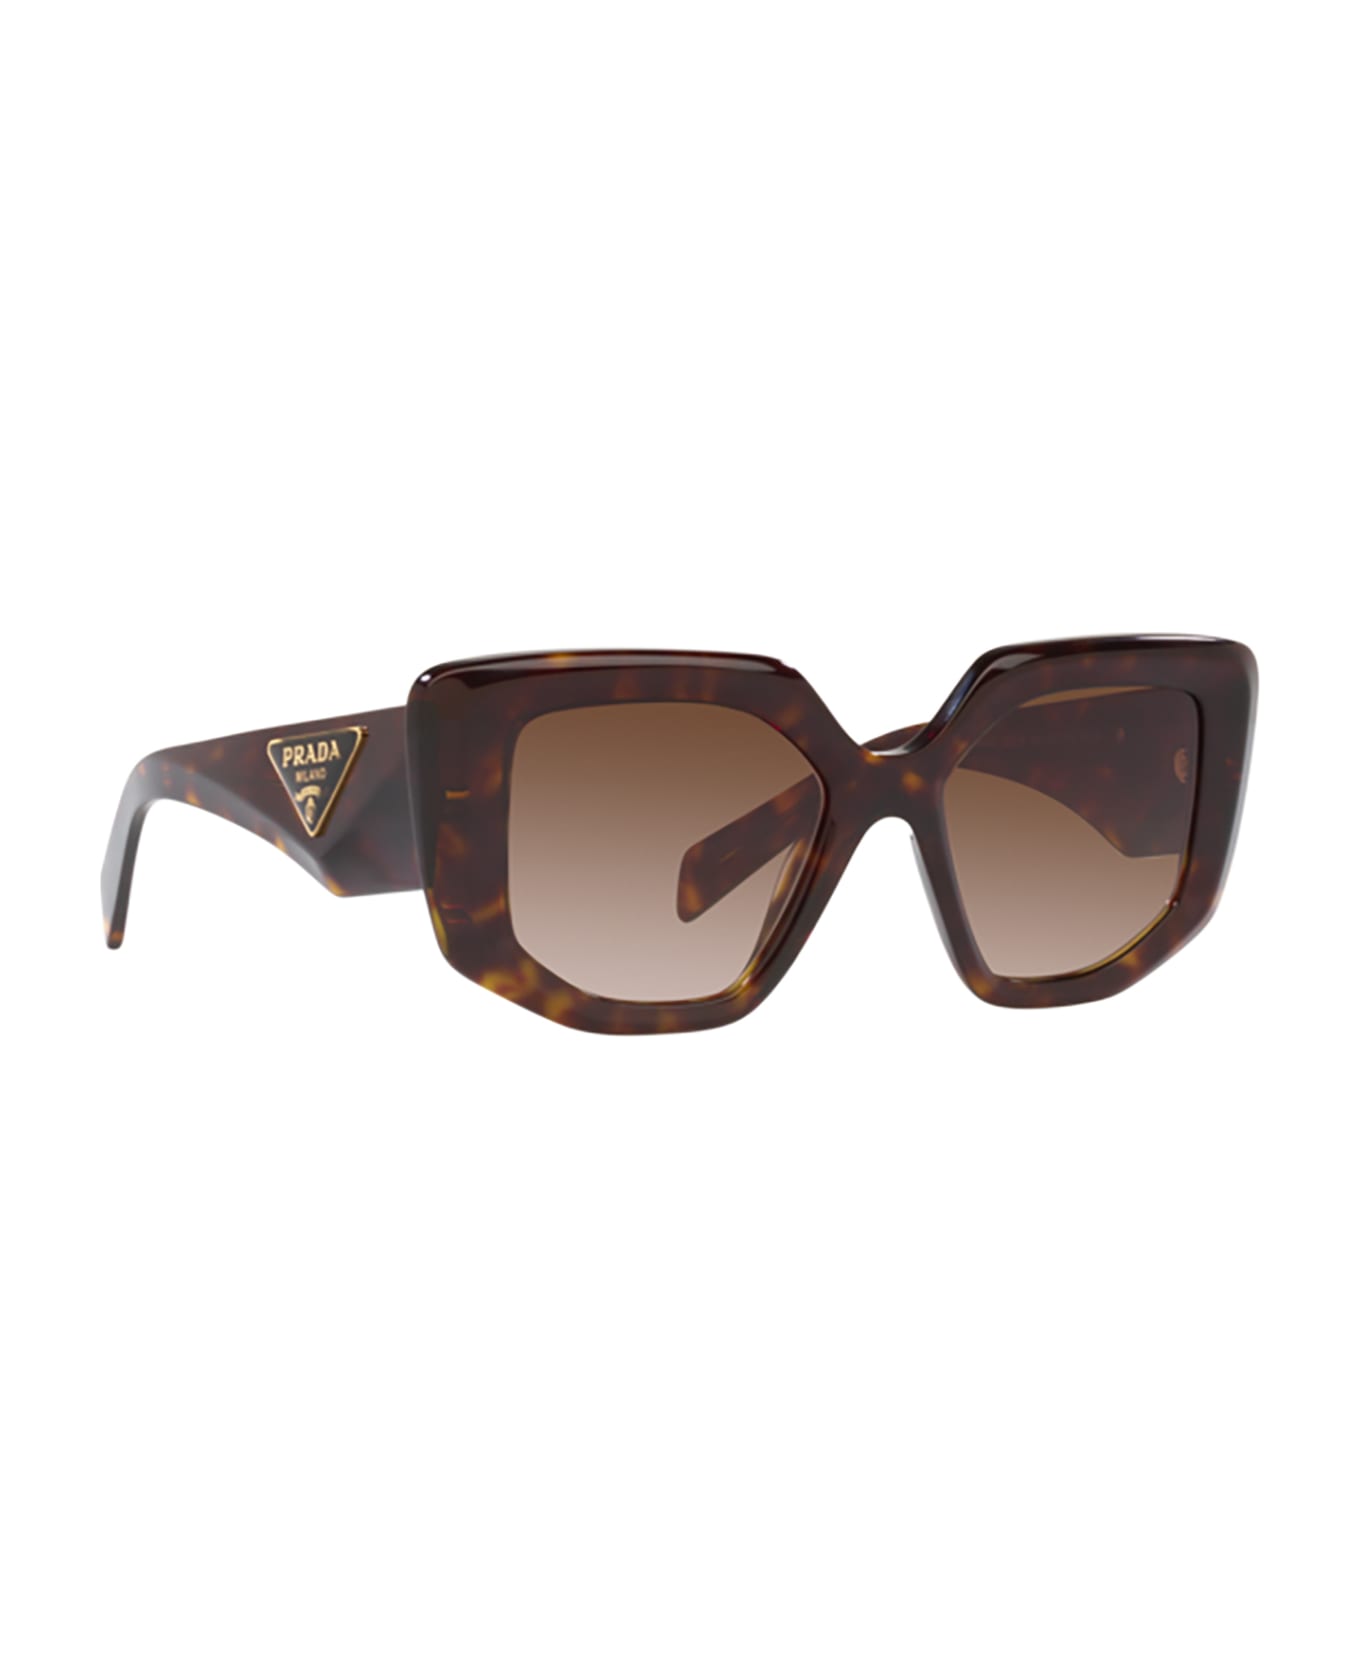 Prada Eyewear Pr 14zs Tortoise Sunglasses - Tortoise サングラス